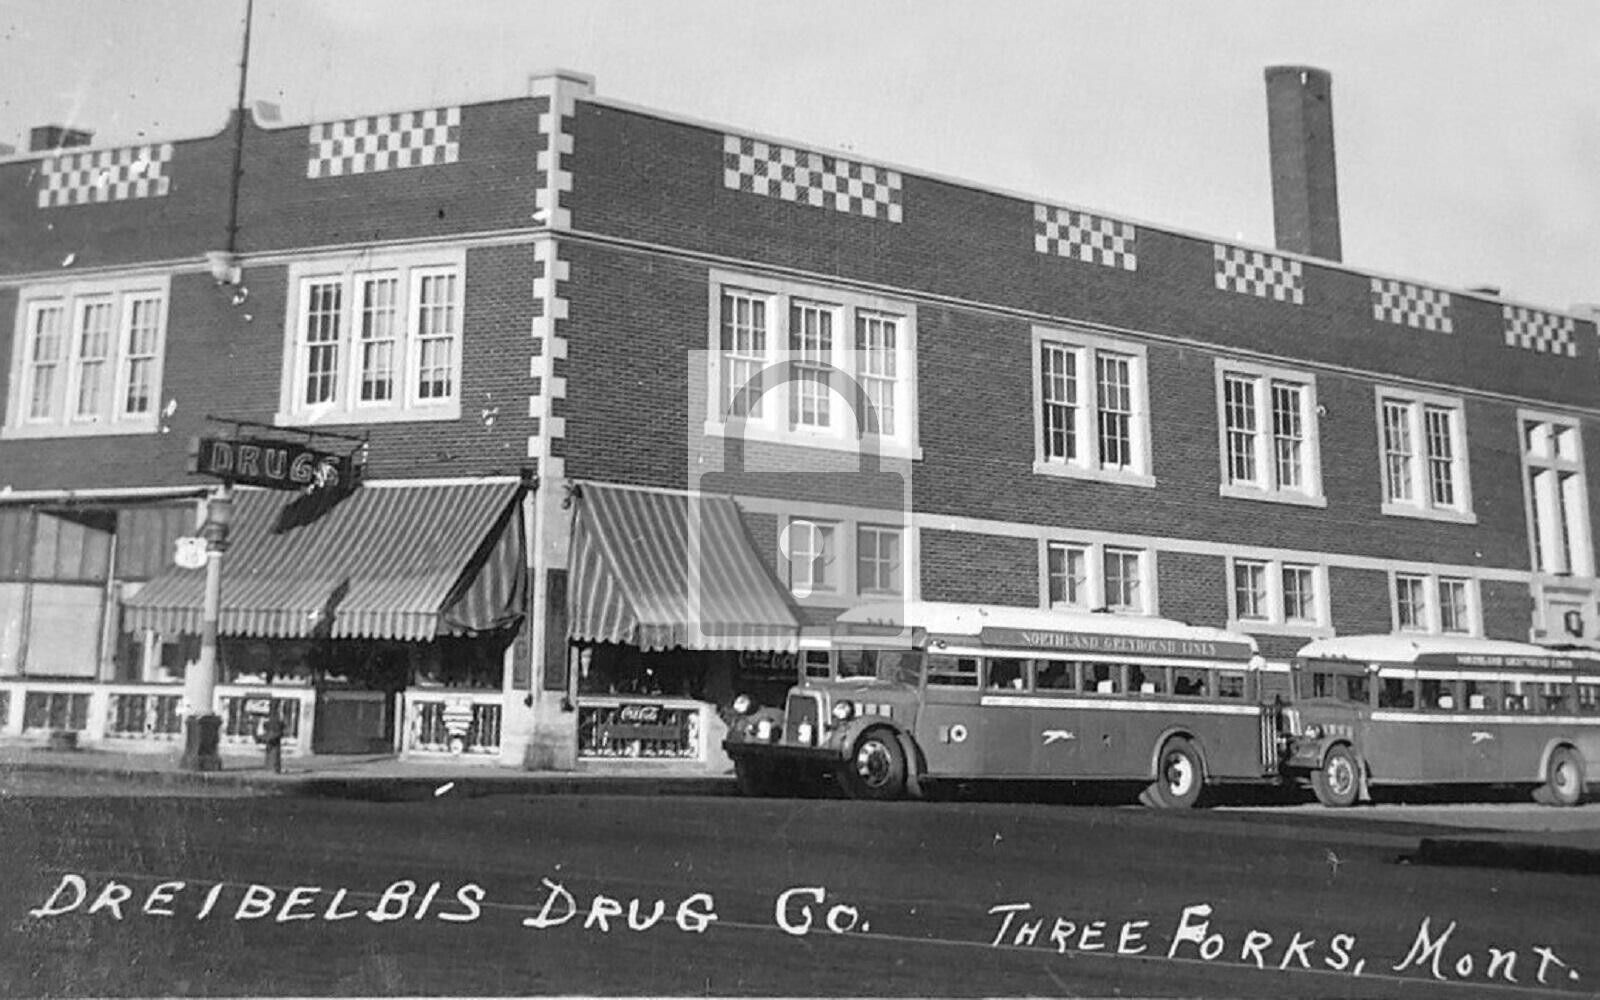 Dreibelbis Drug Store Greyhound Bus Three Forks Montana MT - 8x10 Reprint